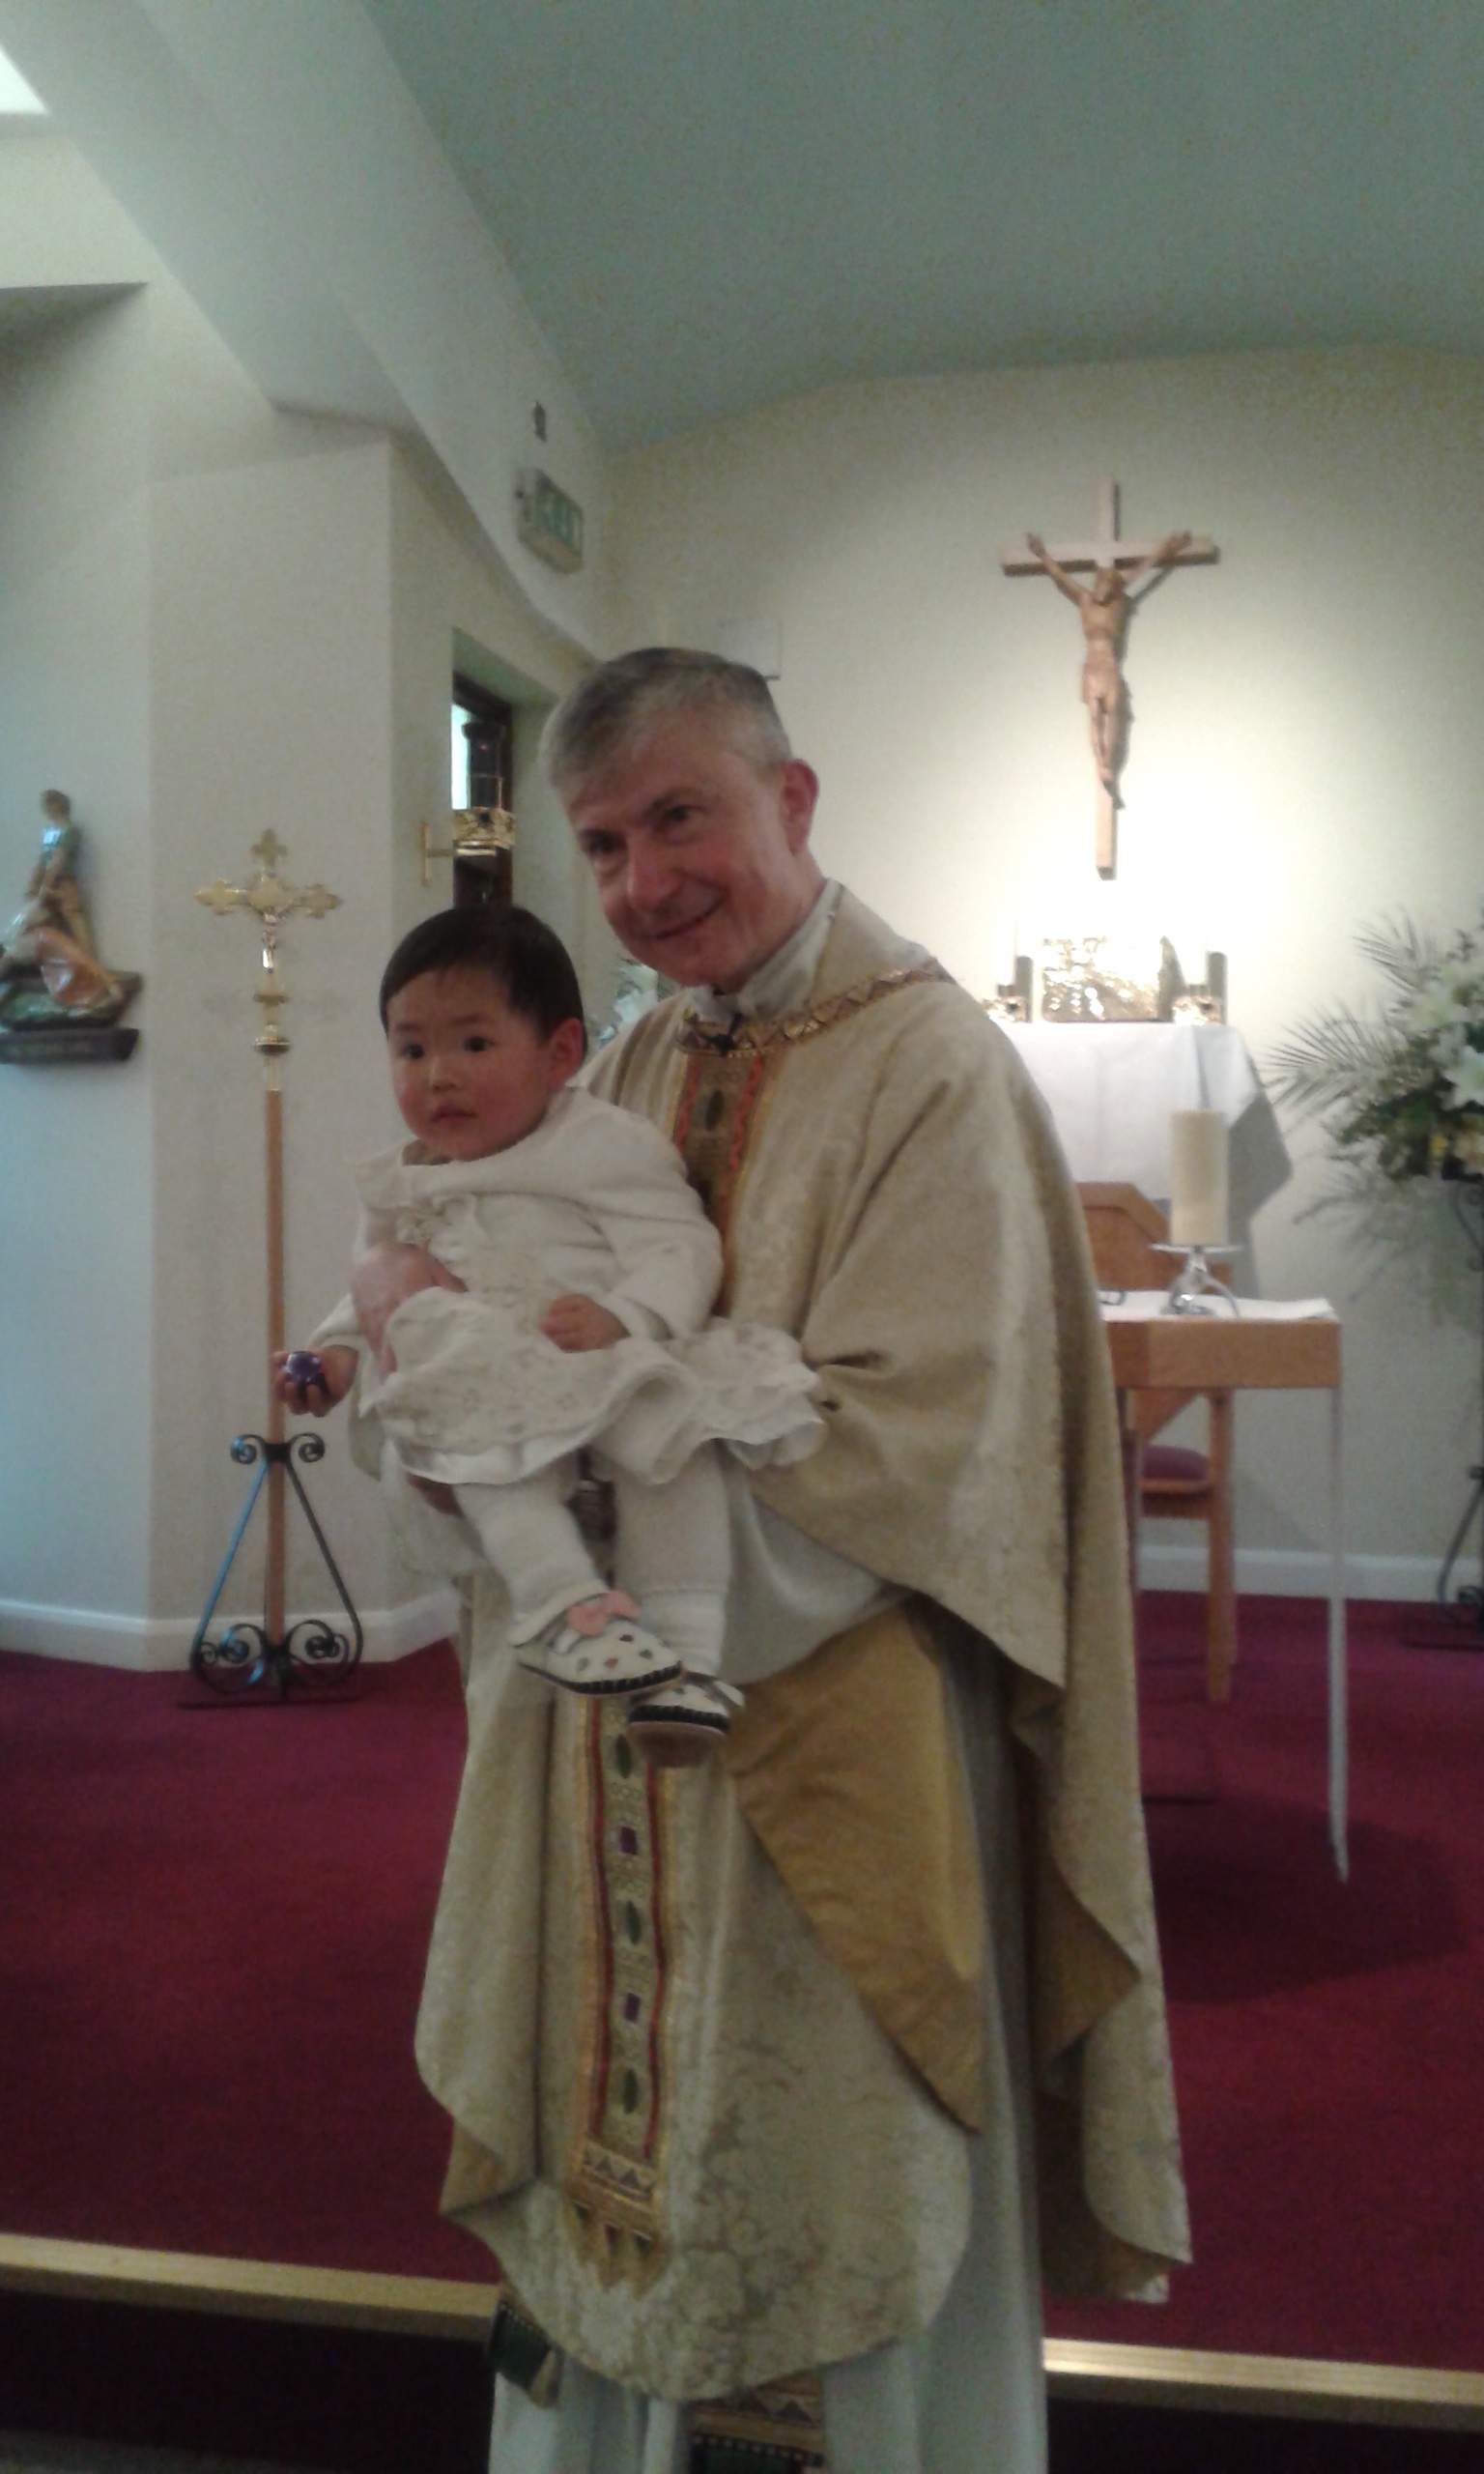 Fr Sean holding the baby (Jay-cee)